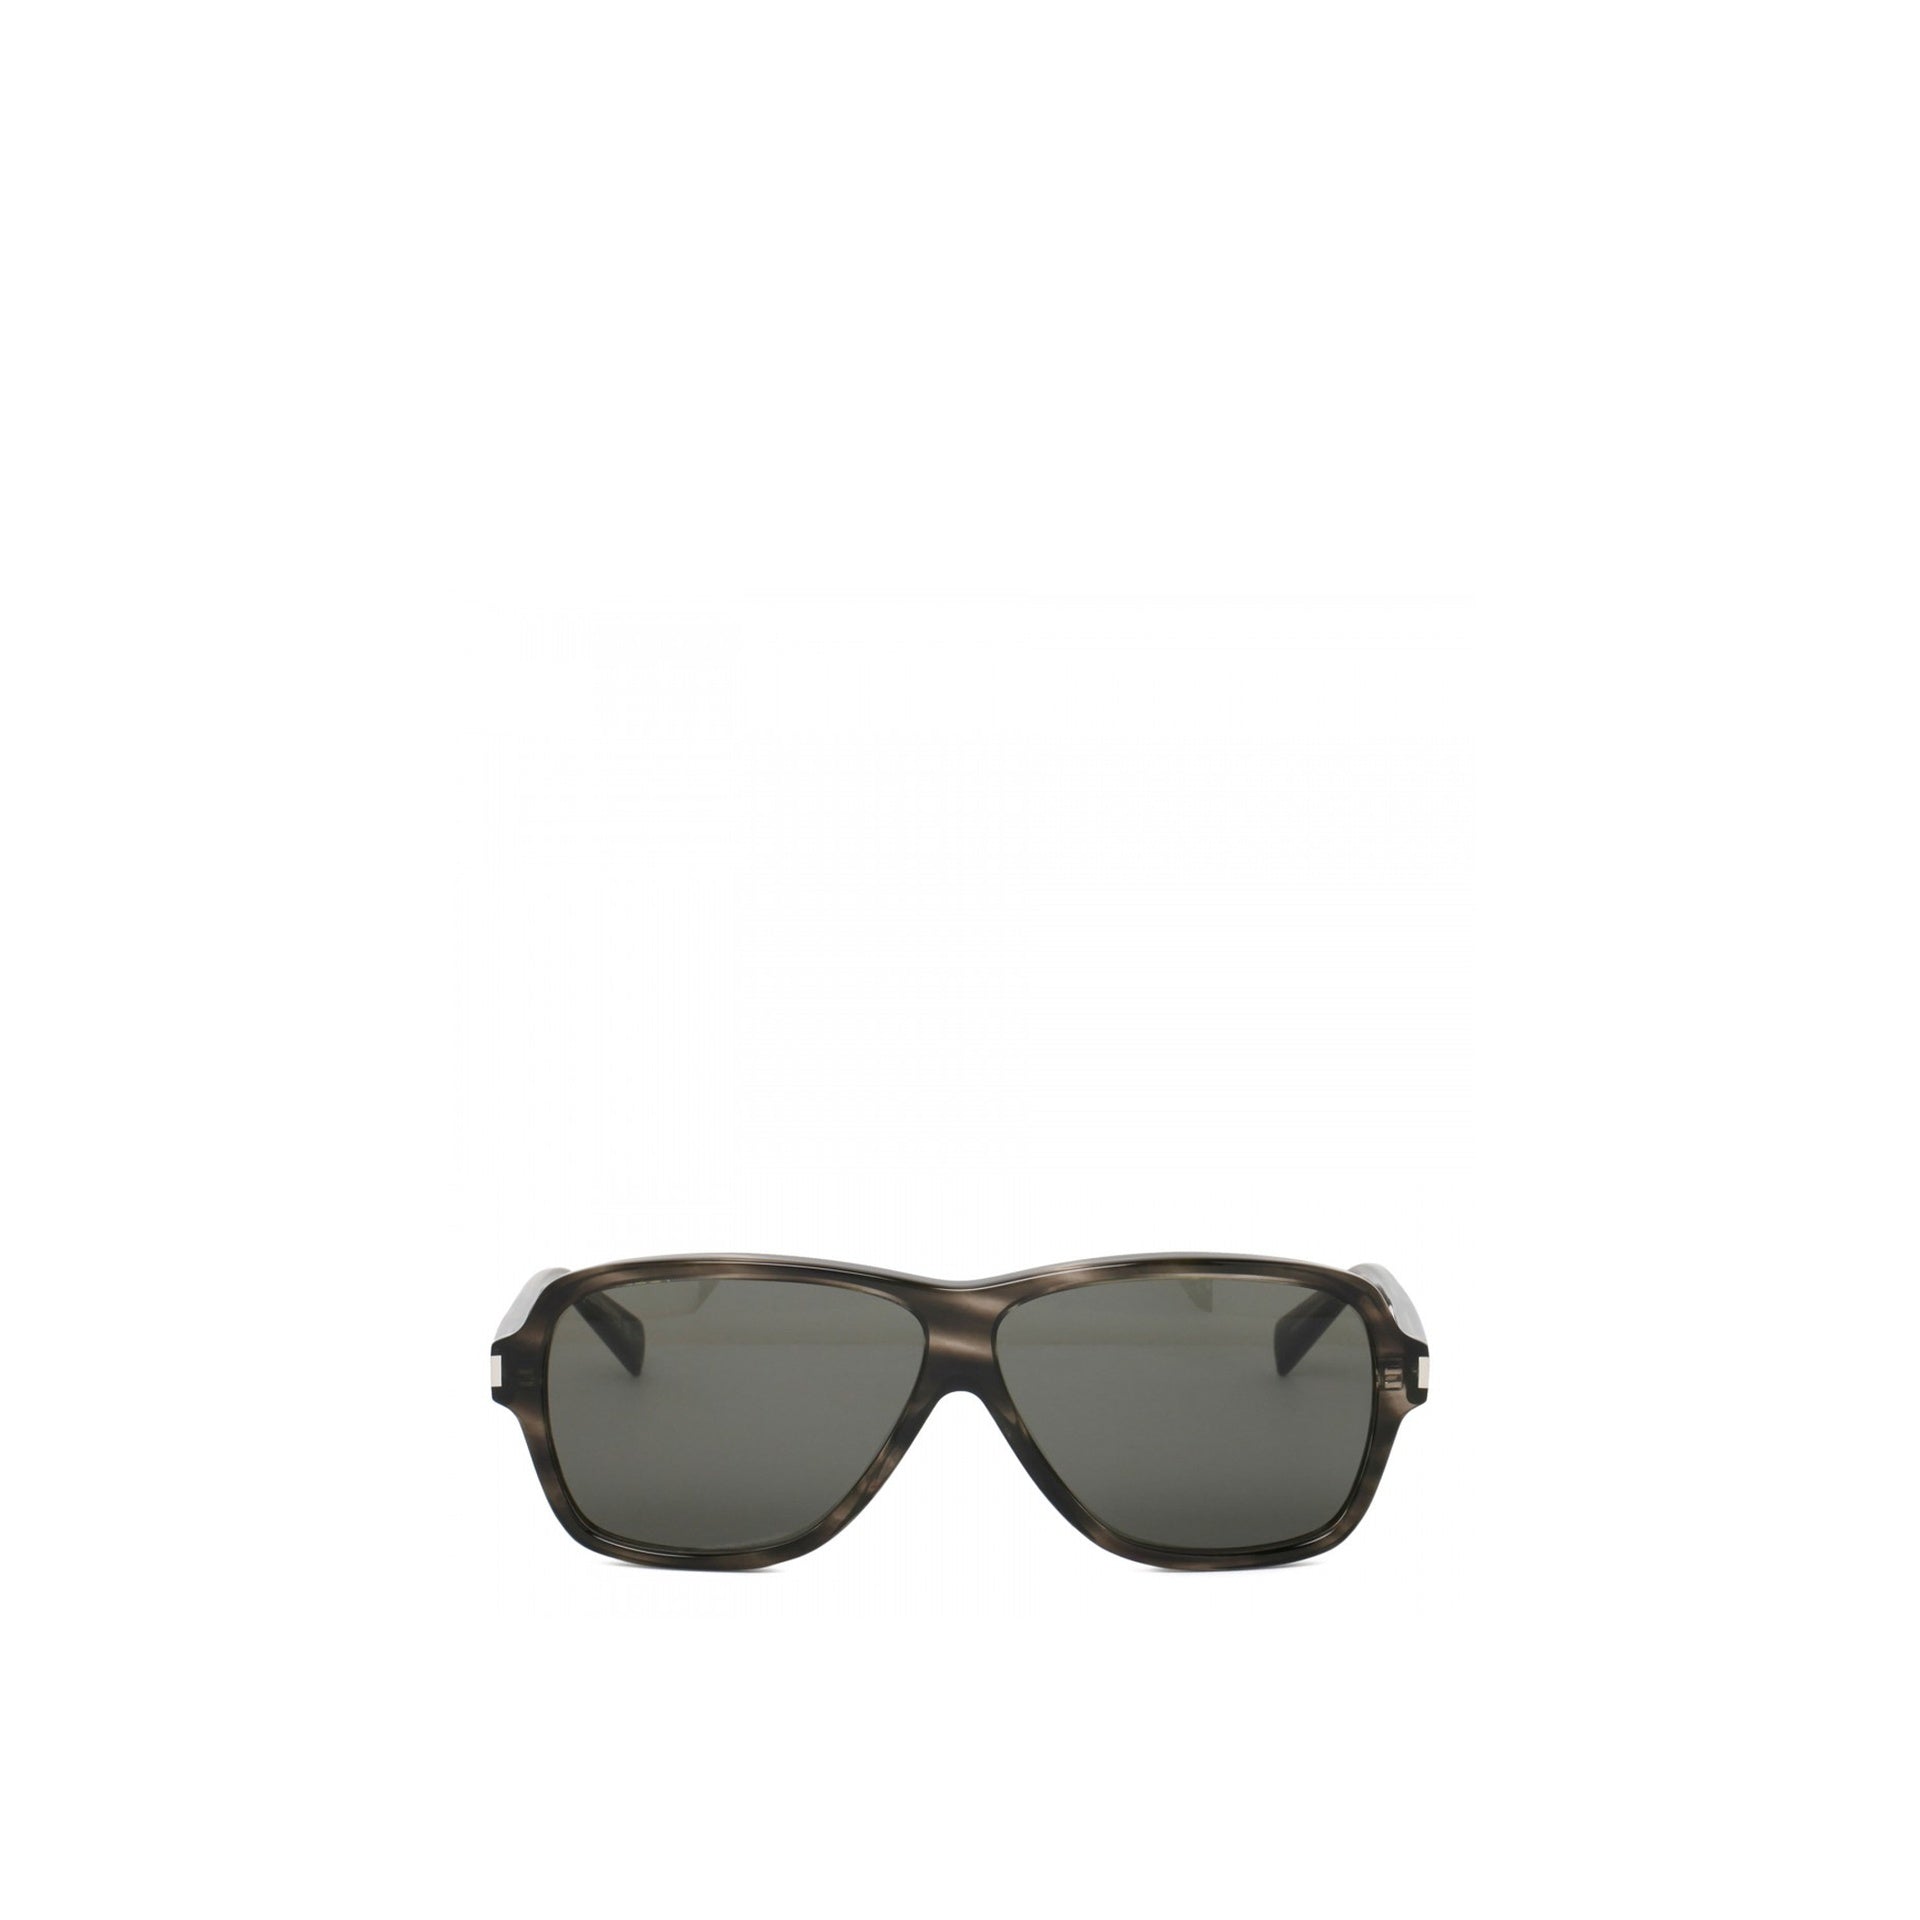 Saint Laurent 609 Aviator Sunglasses